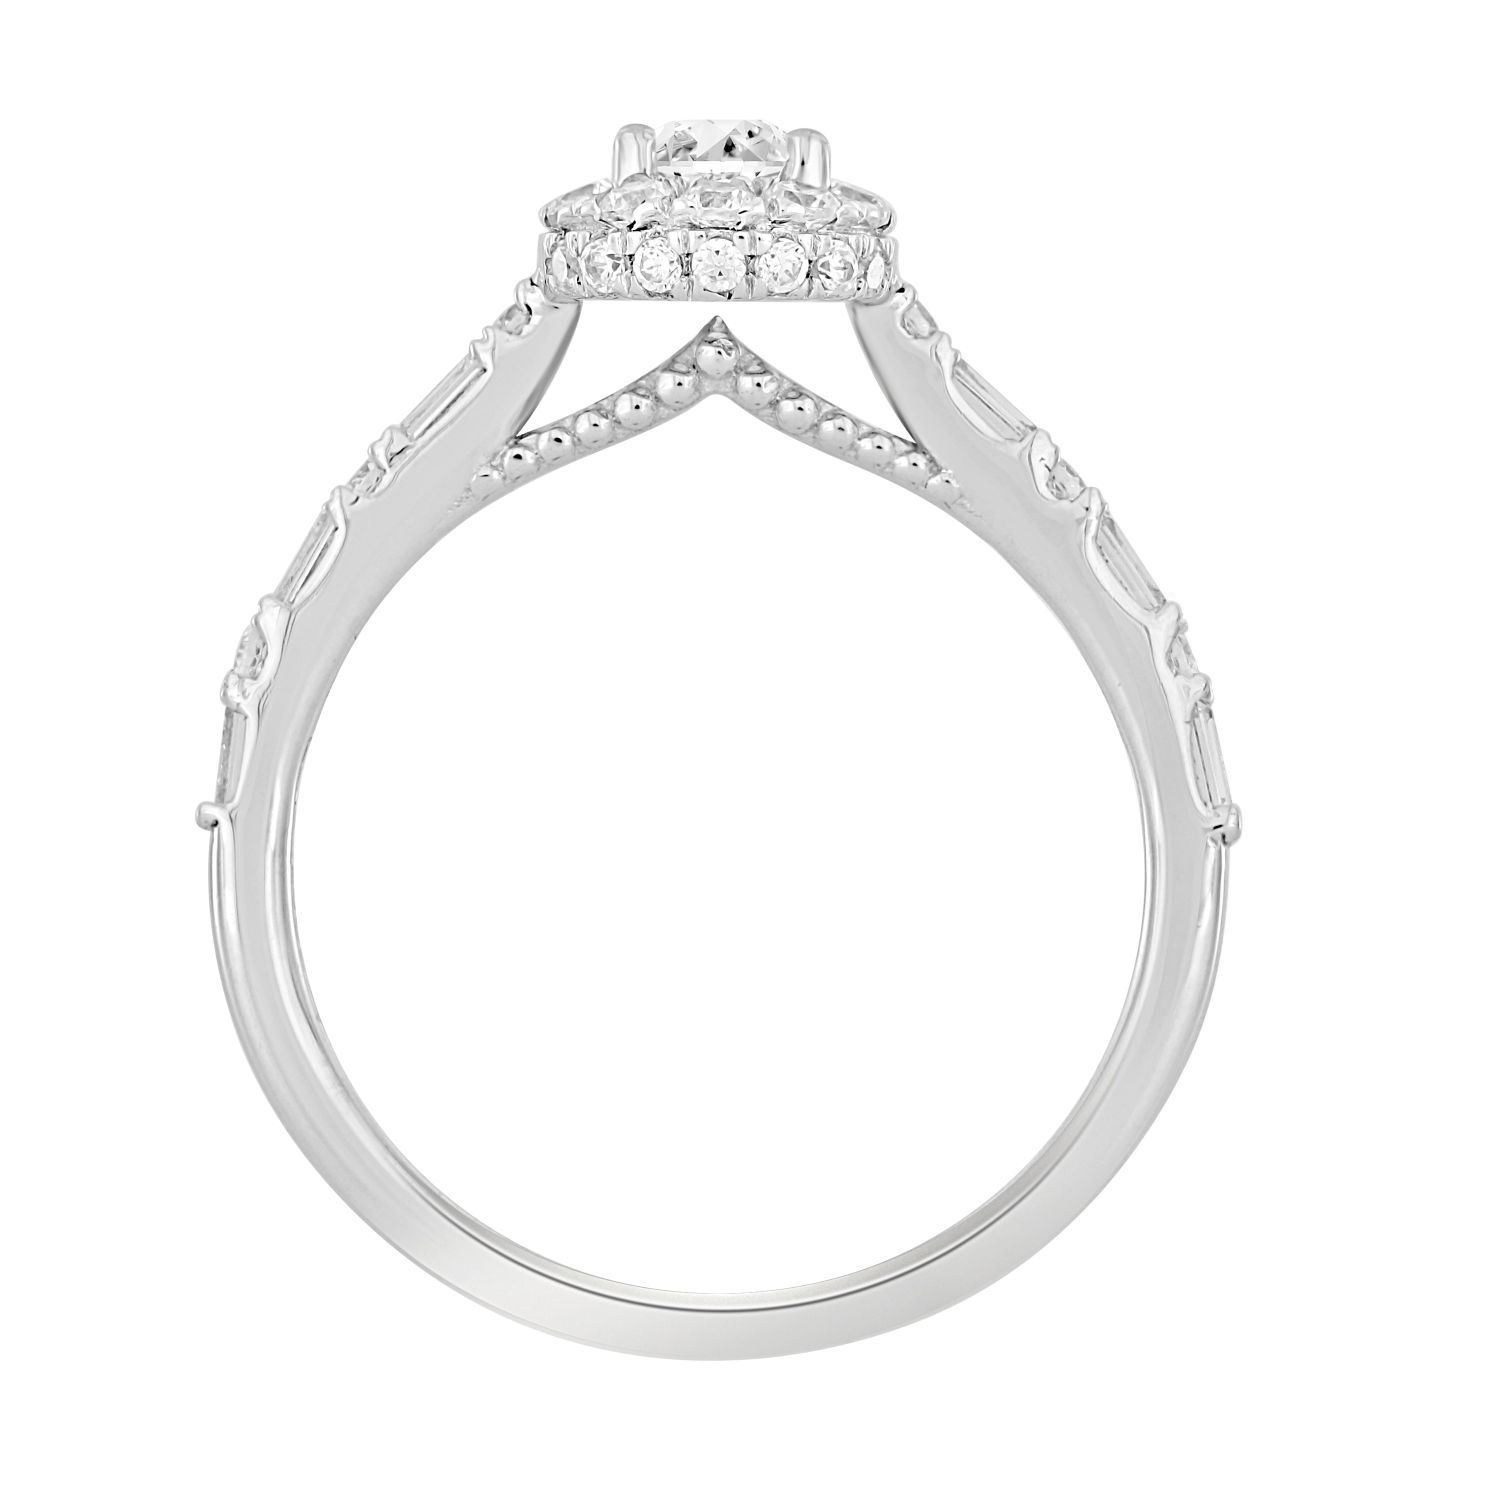 0019197 ladies ring 1 ct roundbaguettepear diamond 14k white gold center 12 si quality